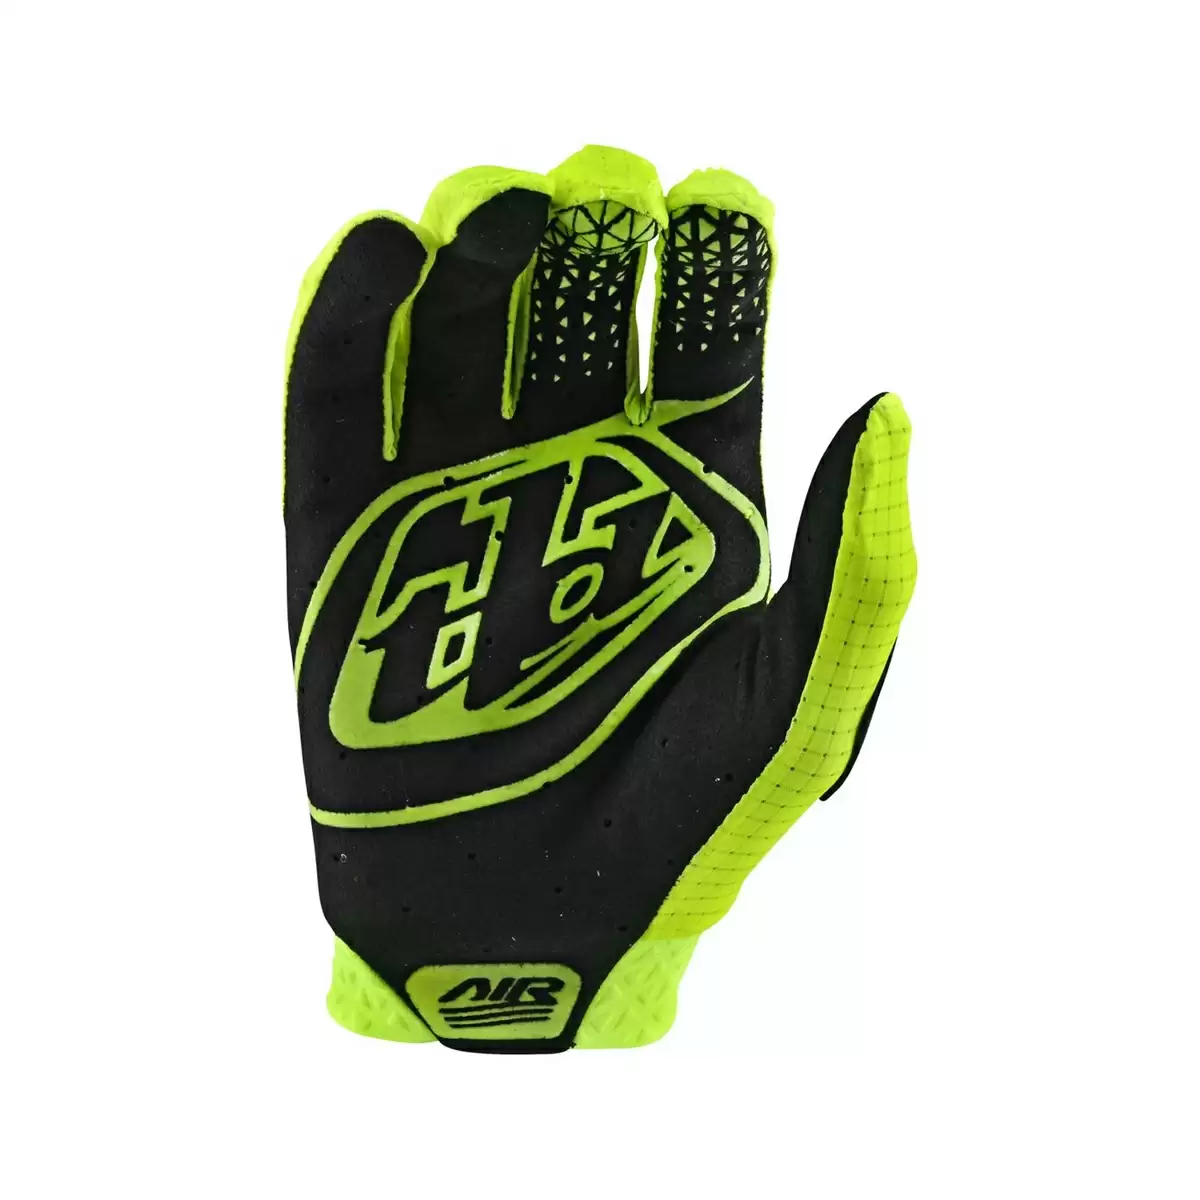 MTB Air Gloves Yellow Size M #1